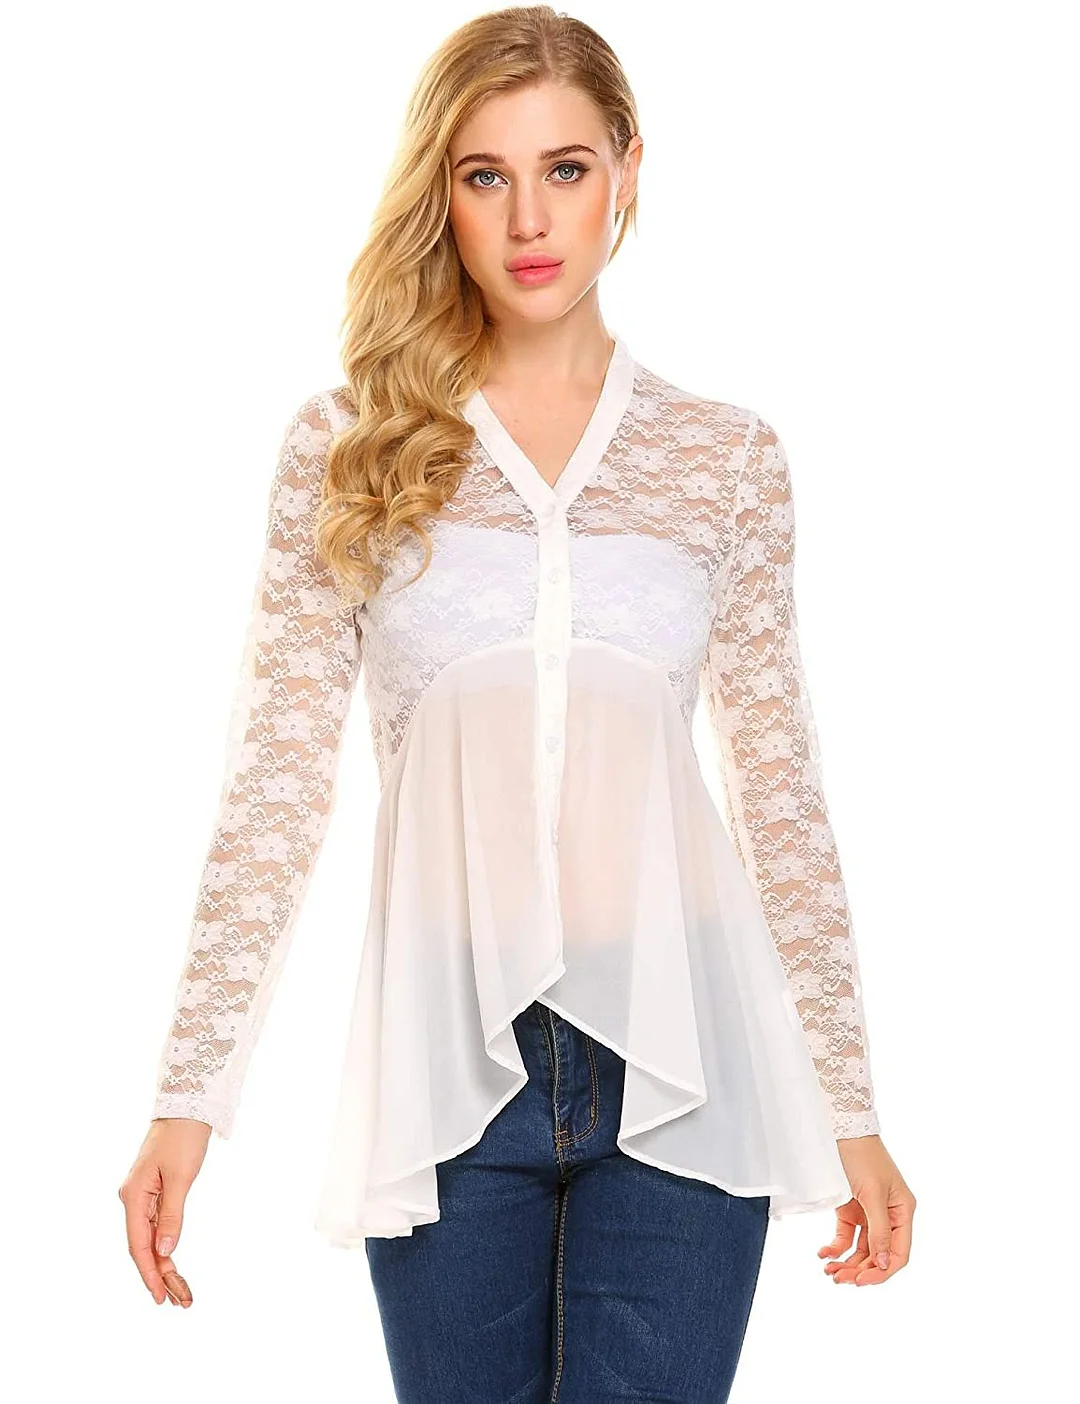 Womens Long Sleeve Blouse Button Up Chiffon Lace Sheer Flowy Shirt Top